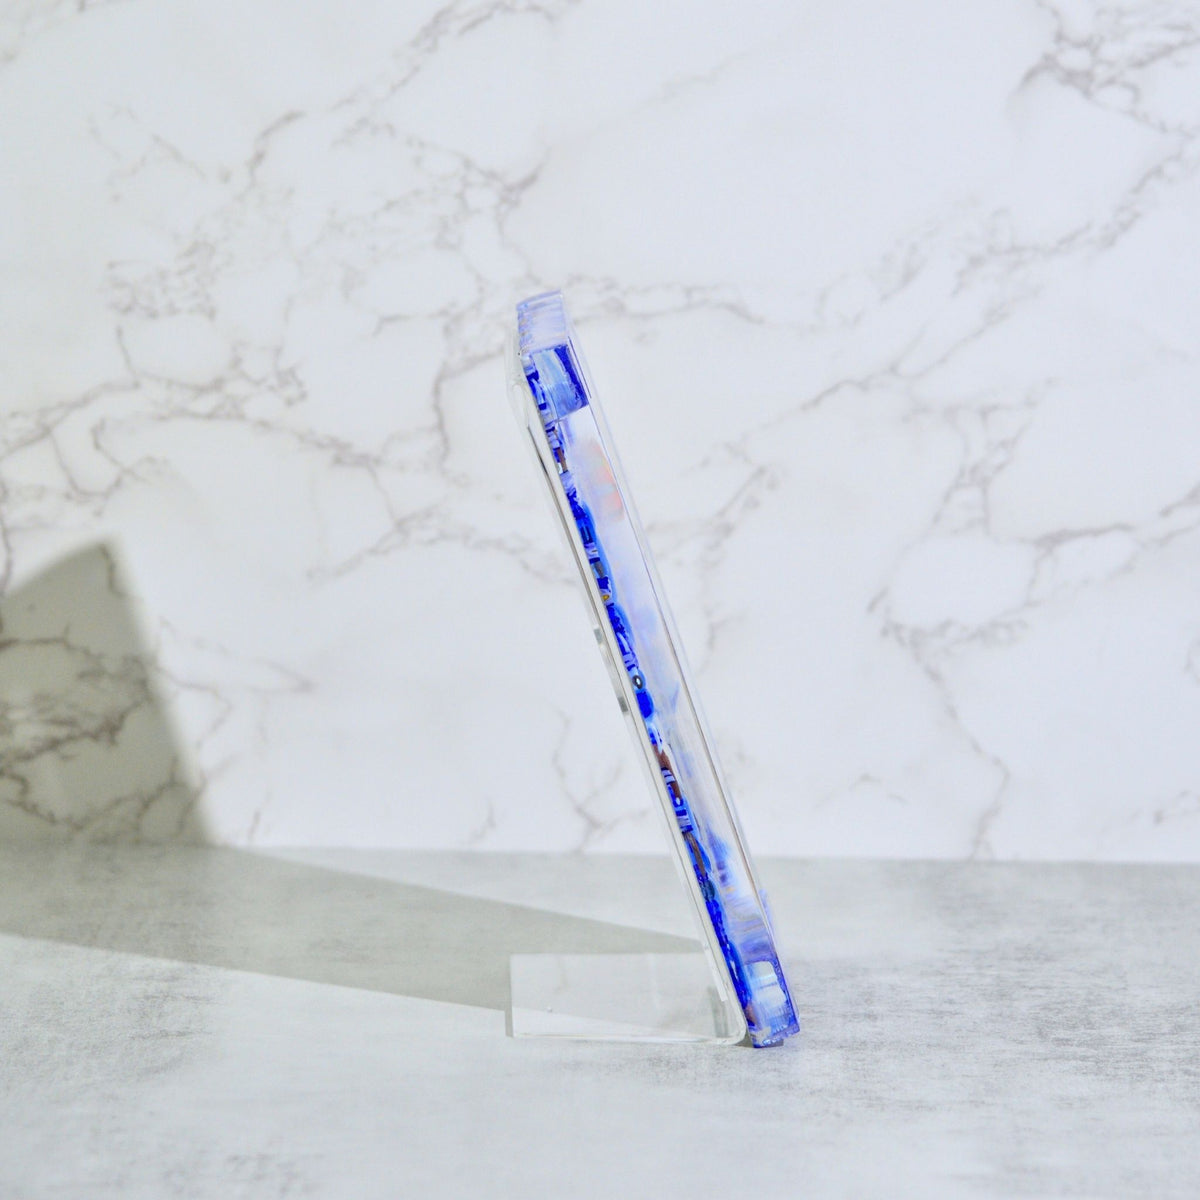 Blue Murano Glass Millefiori 5&quot; x 7&quot; Photo Frame, Made in Italy - My Italian Decor